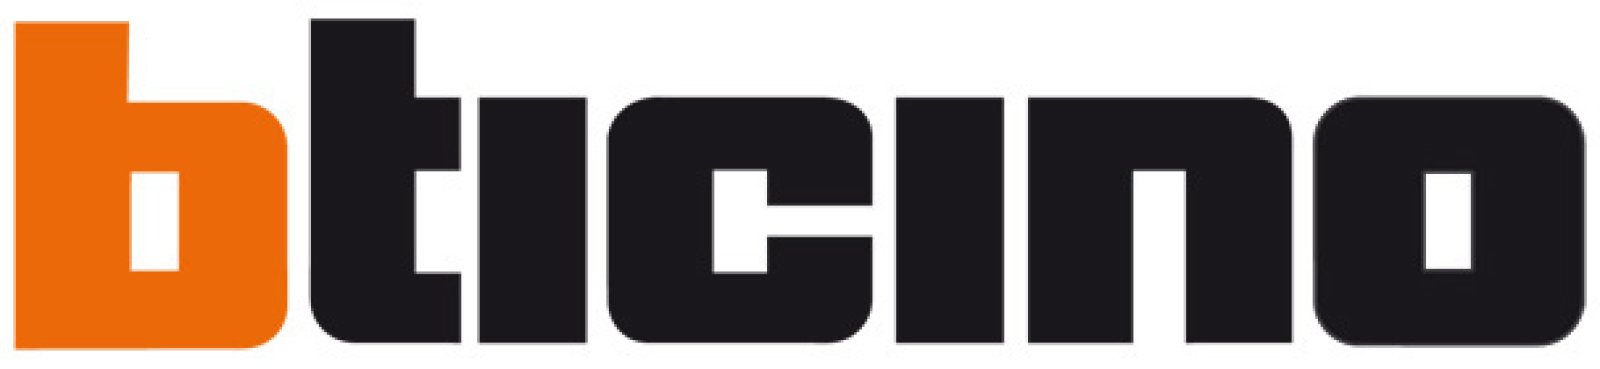 Logo BTicino